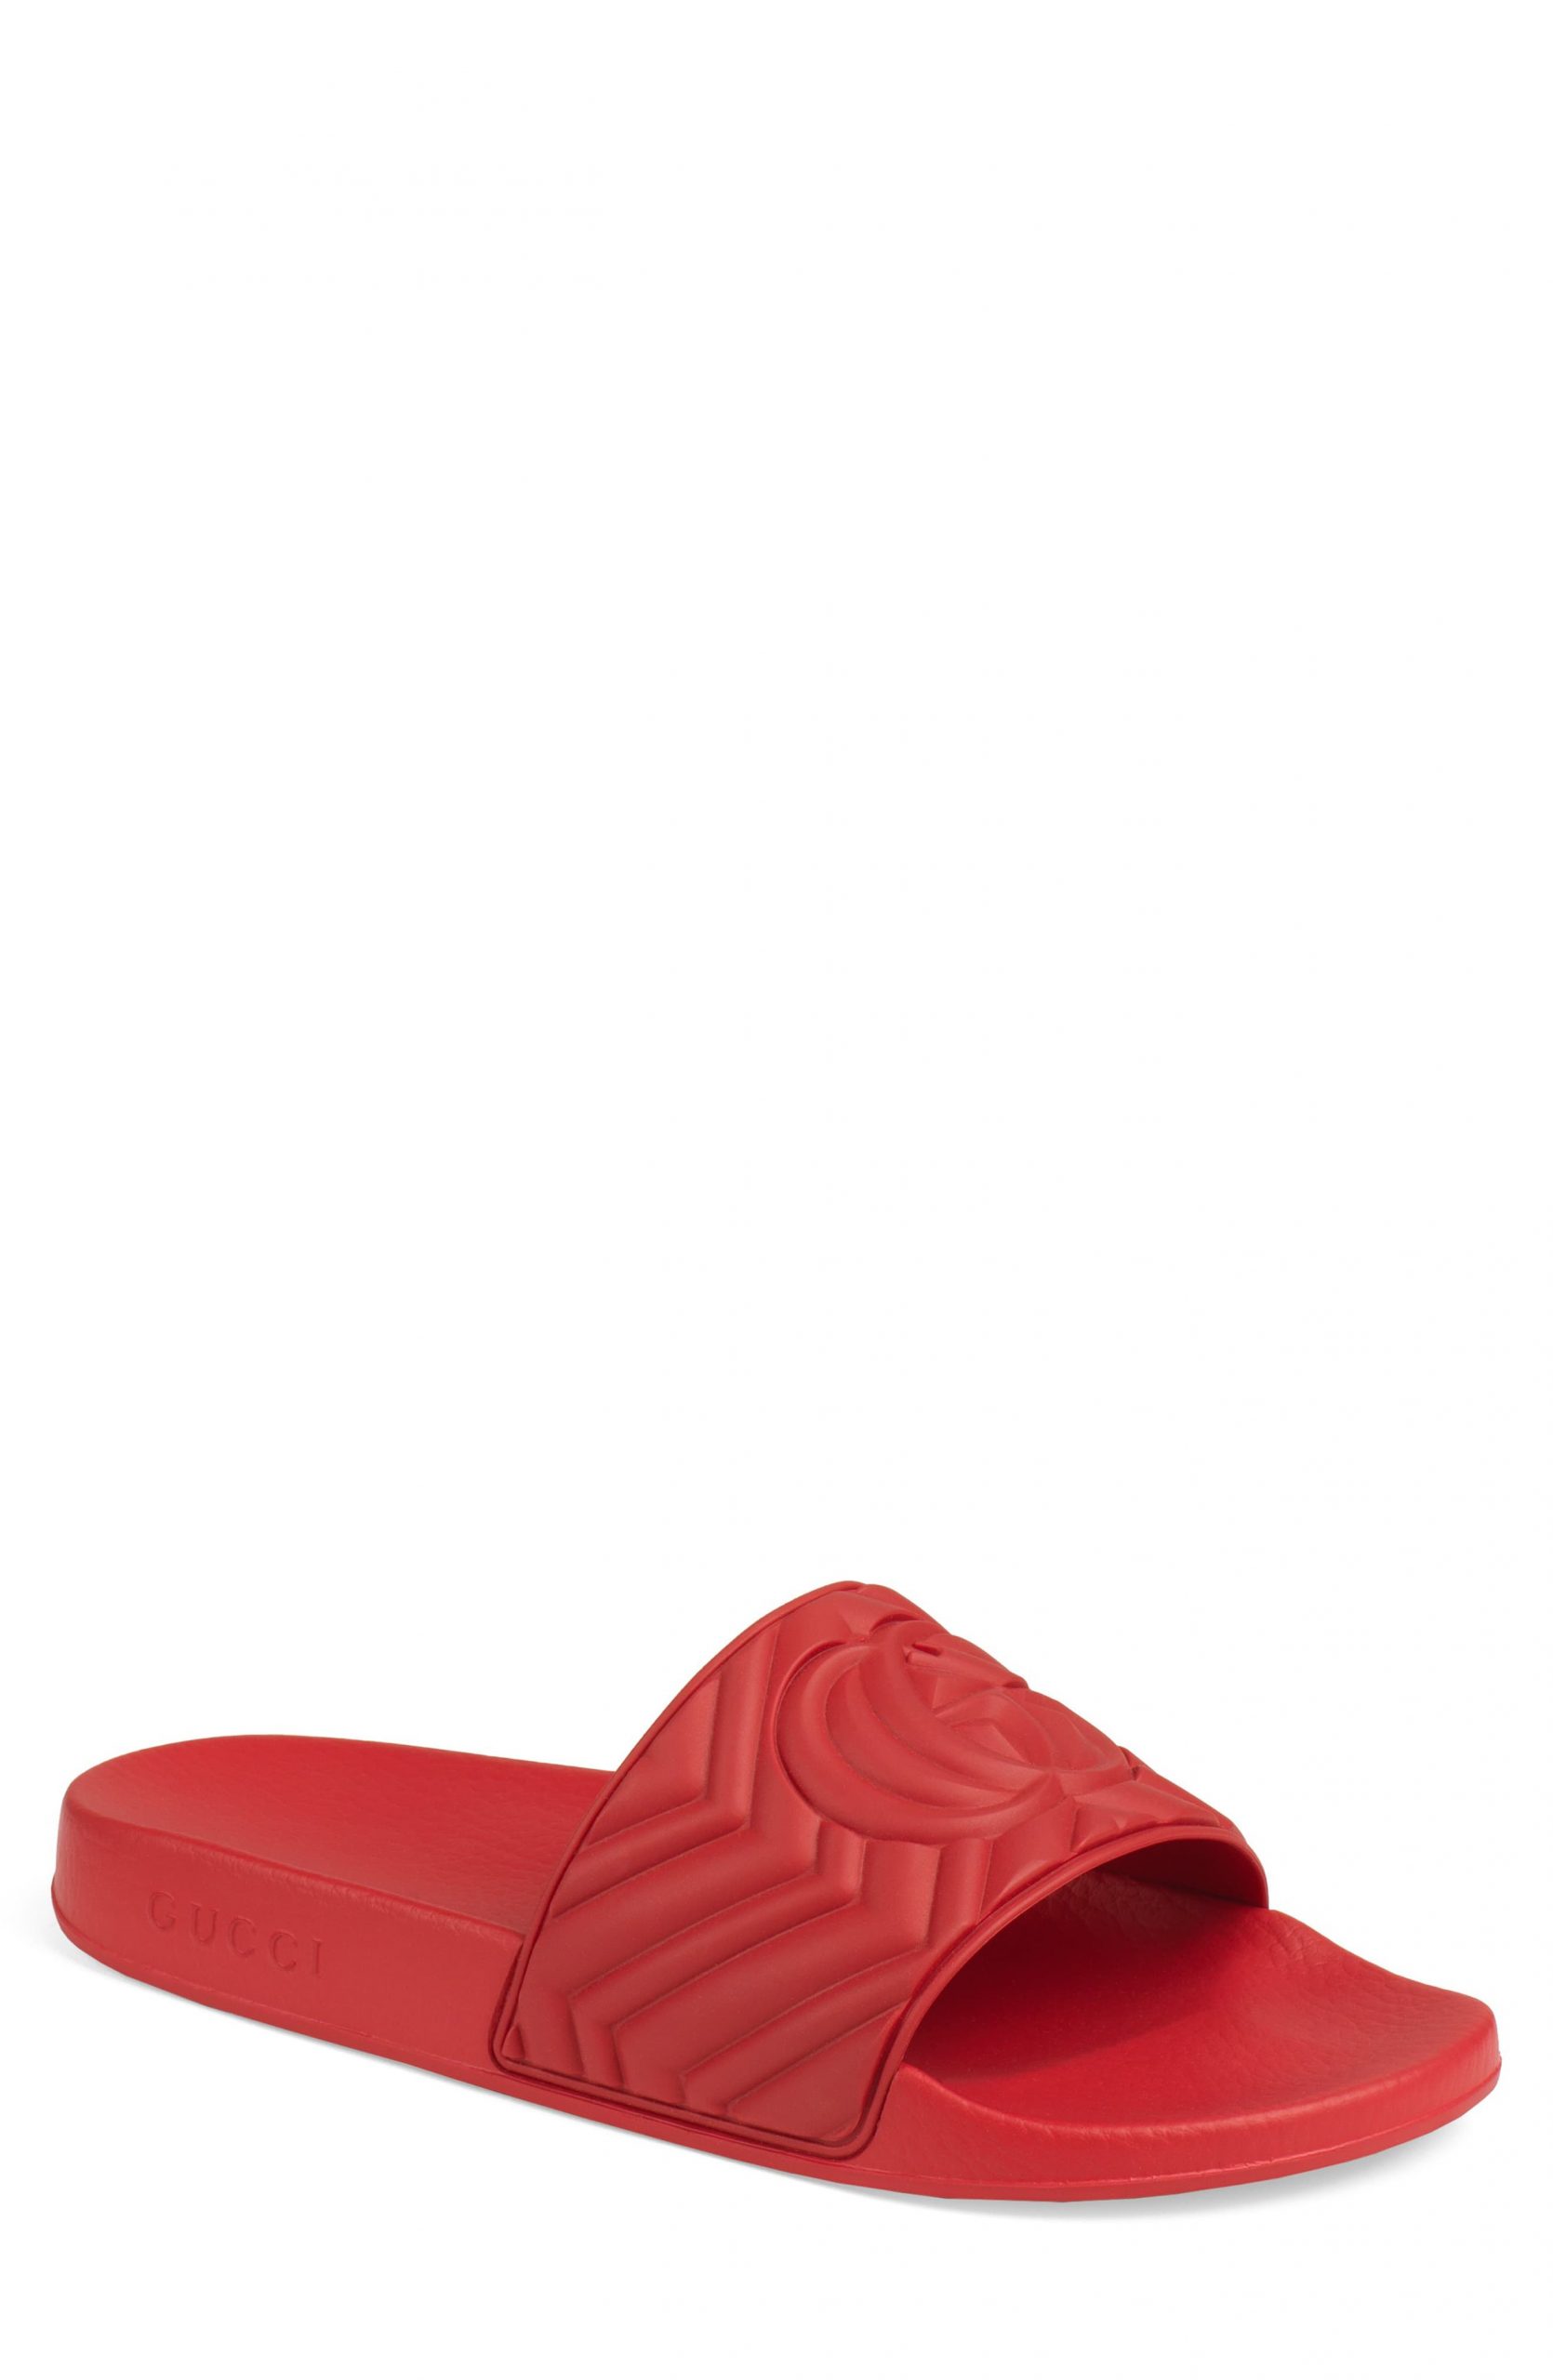 Men’s Gucci Pursuit Matelasse Slide Sandal, Size 15US / 14UK – Red ...